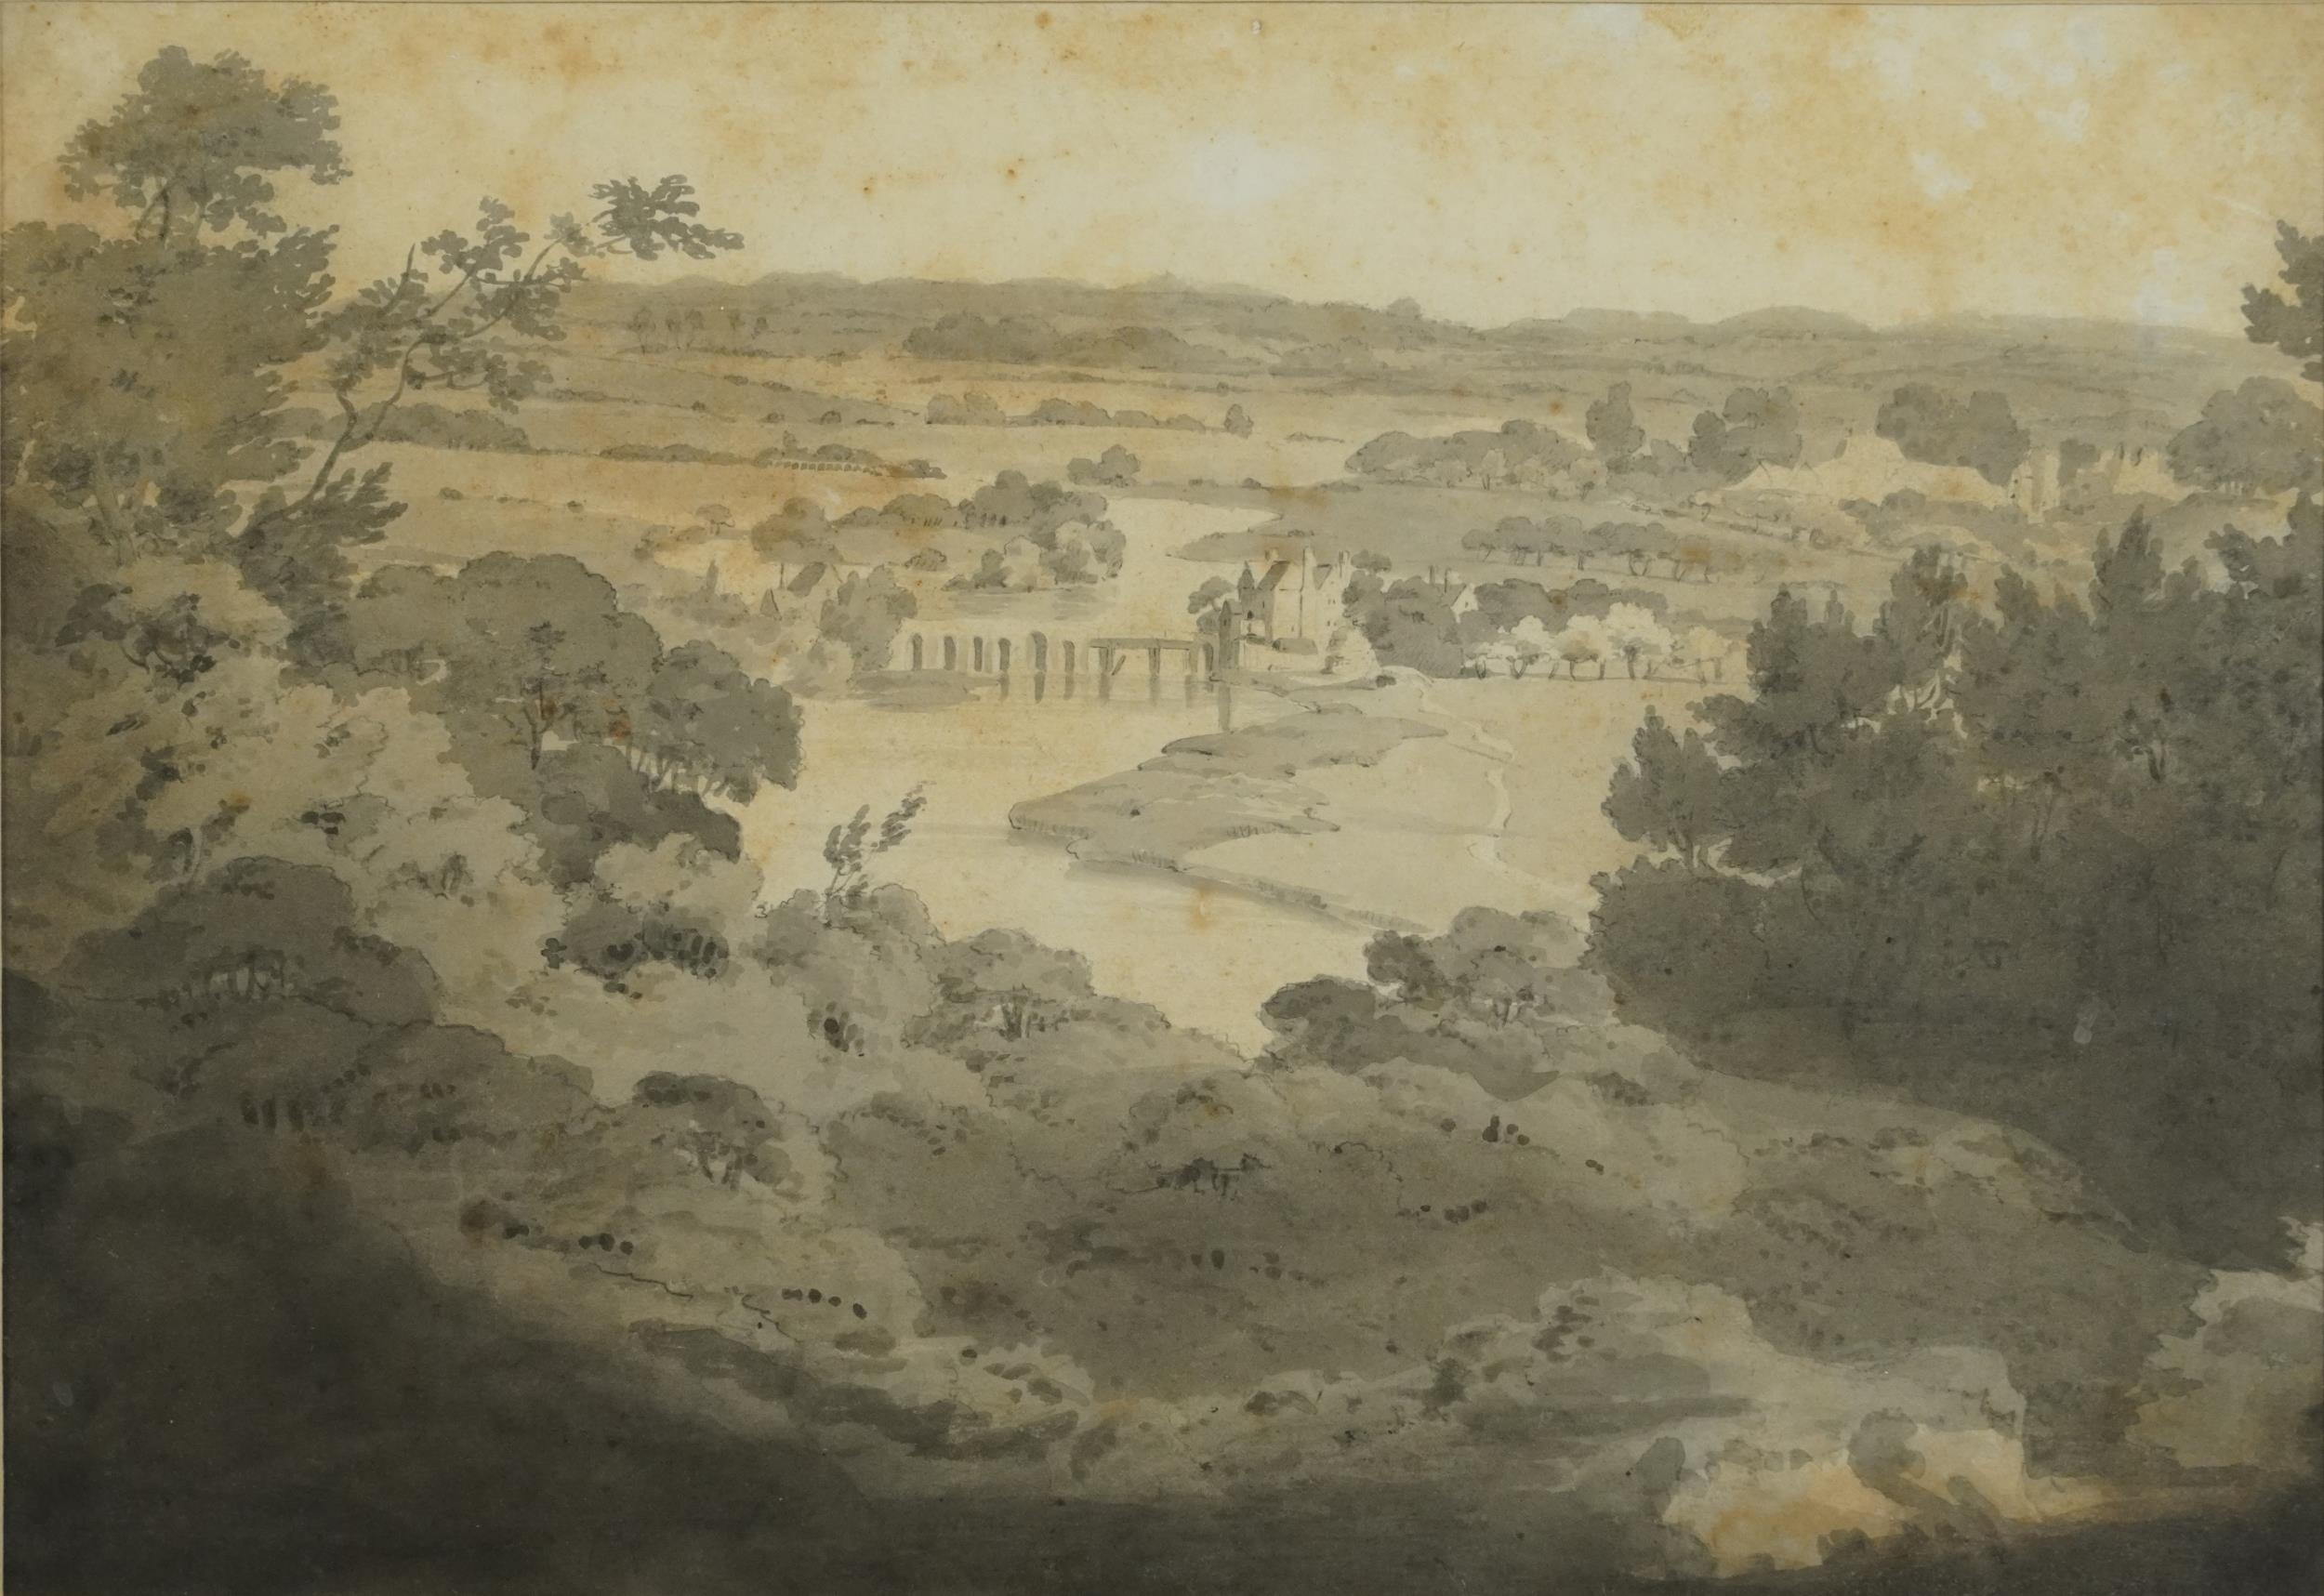 William Havell - Caversham Bridge, Reading, early 19th century English pencil and watercolour,